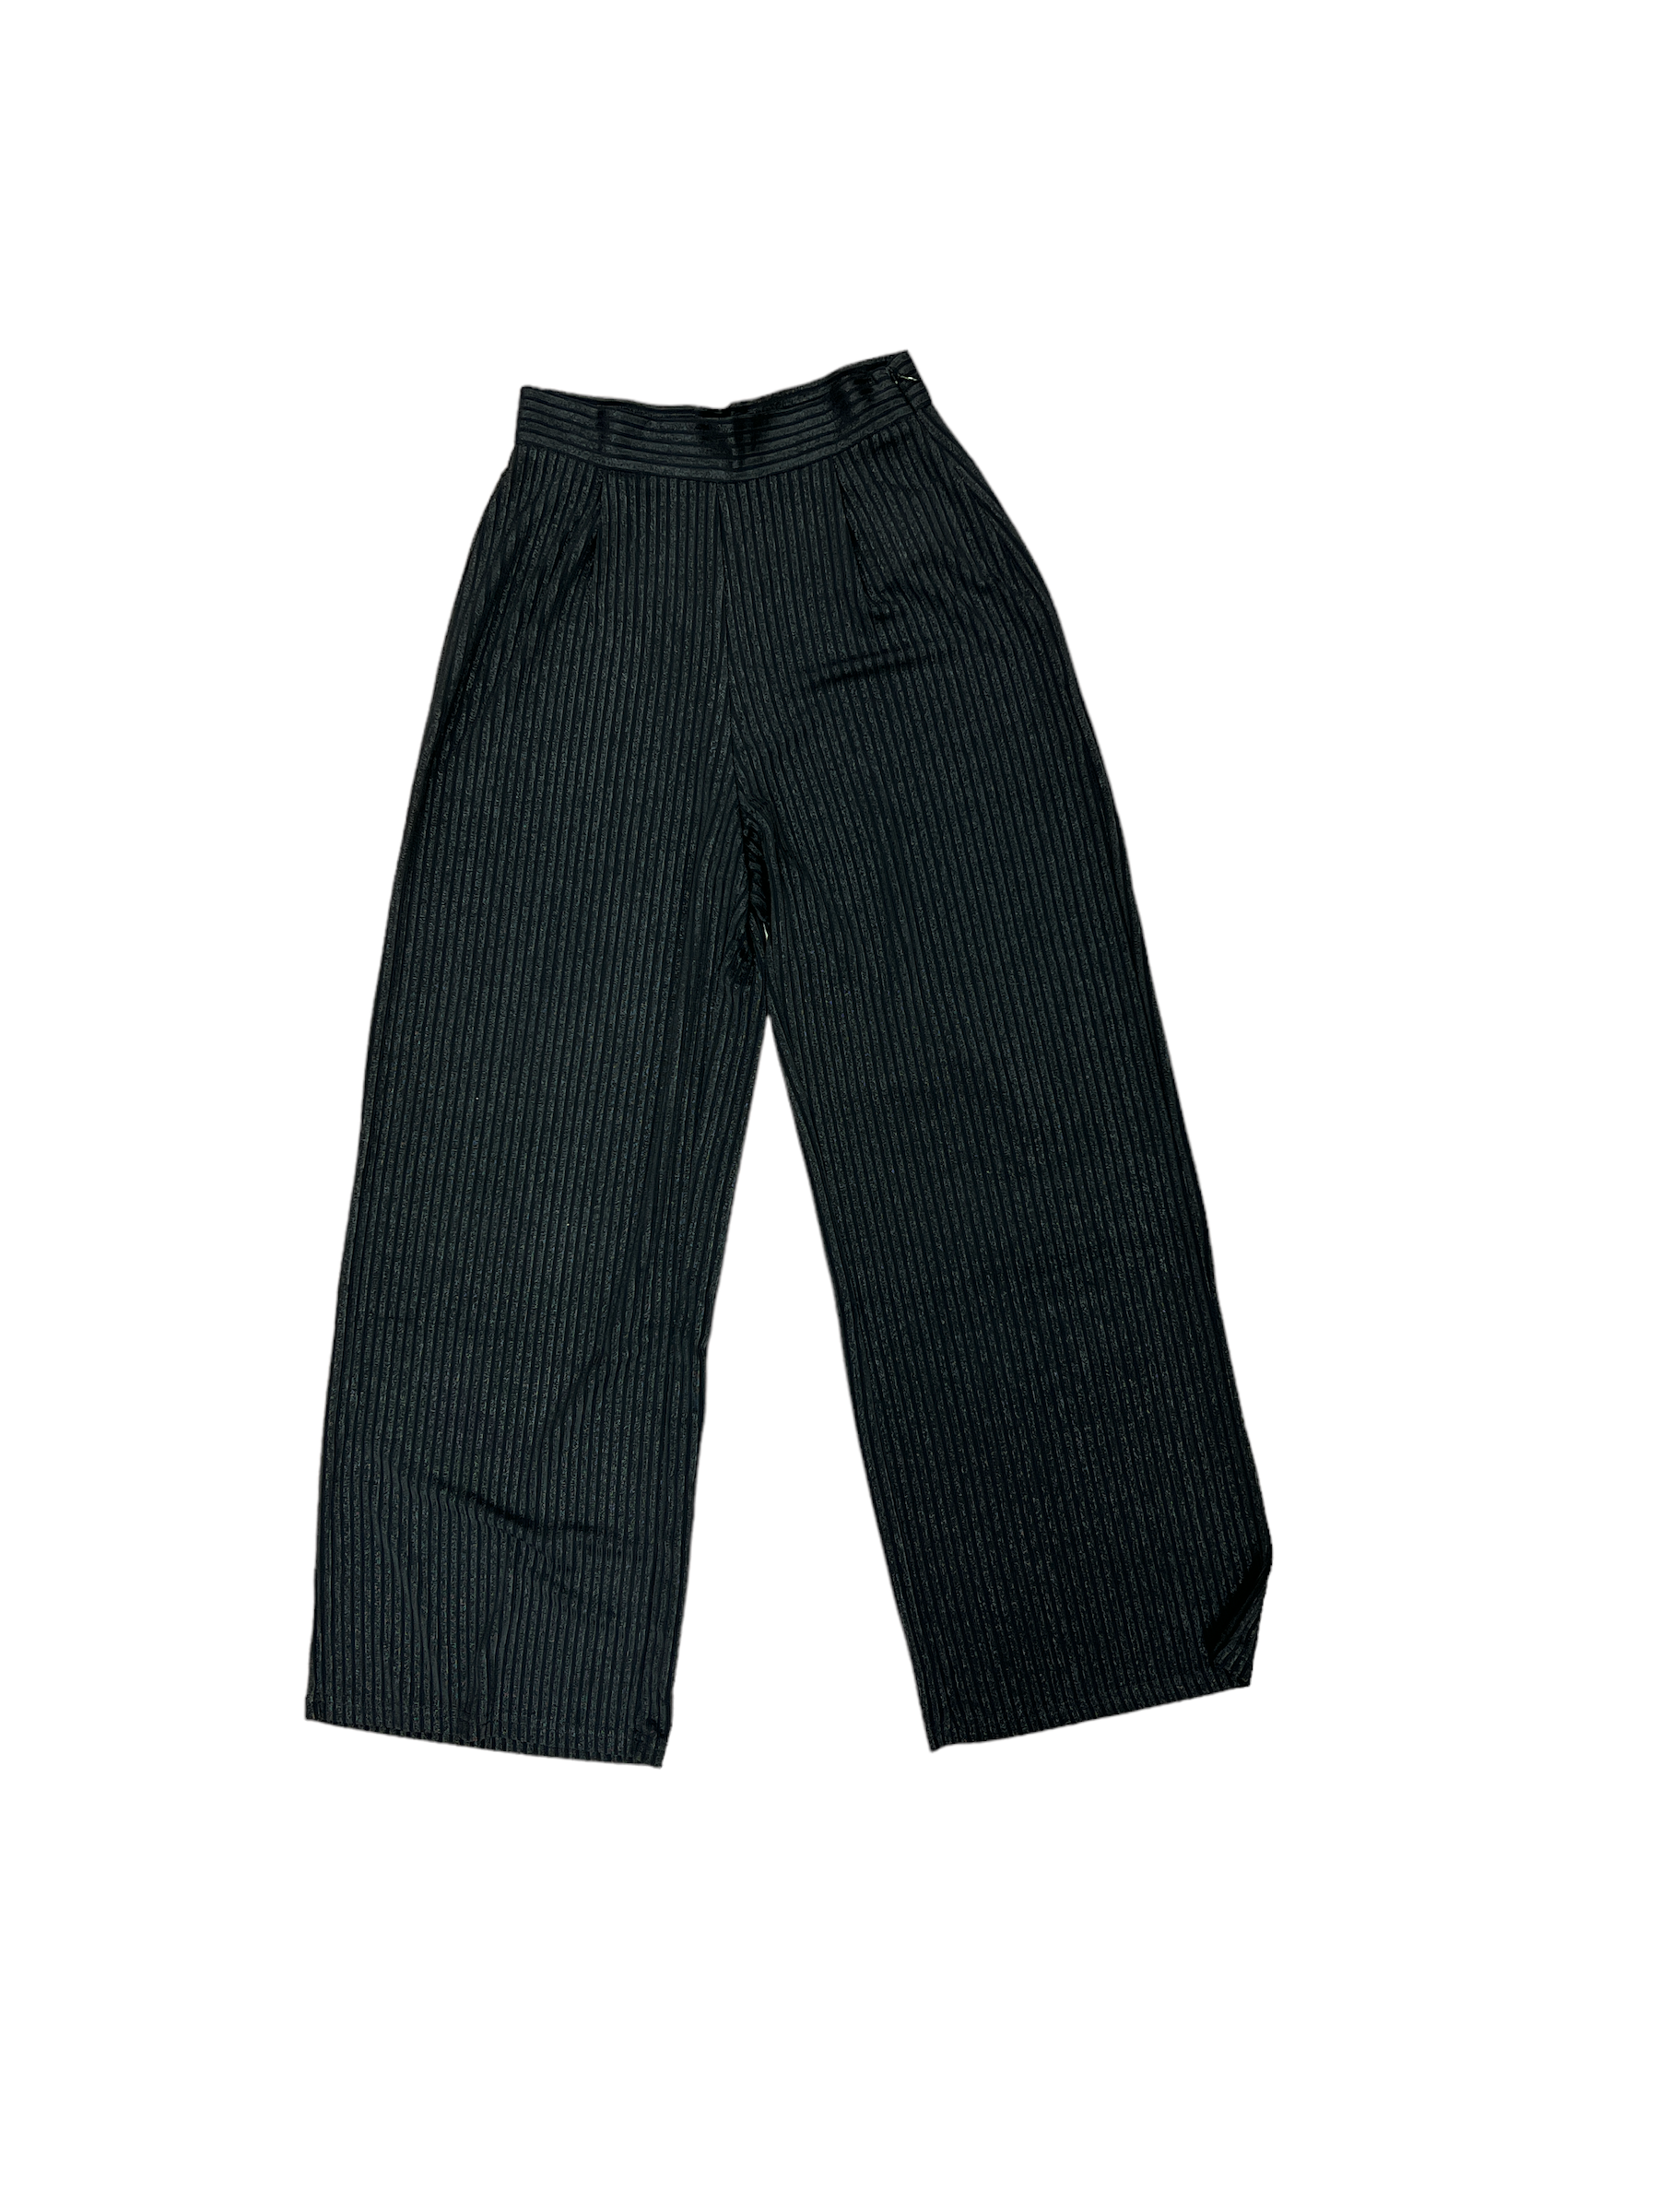 Leila Pant-230 Pants-Simply Stylish Boutique-Simply Stylish Boutique | Women’s & Kid’s Fashion | Paducah, KY